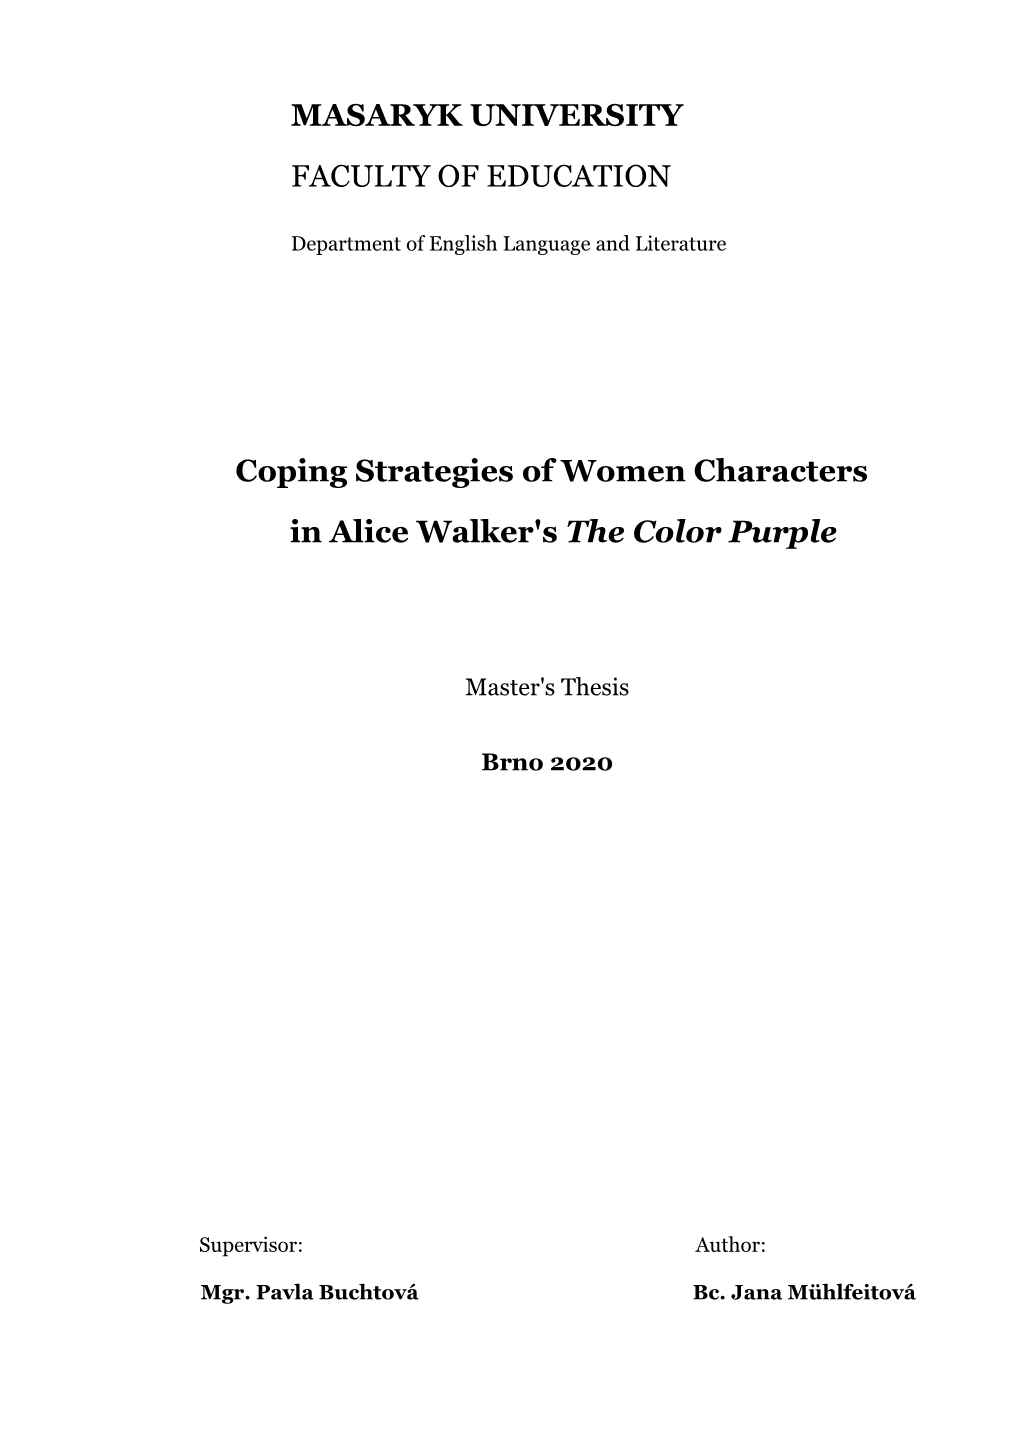 Coping Strategies of Women Characters in Alice Walker's the Color Purple